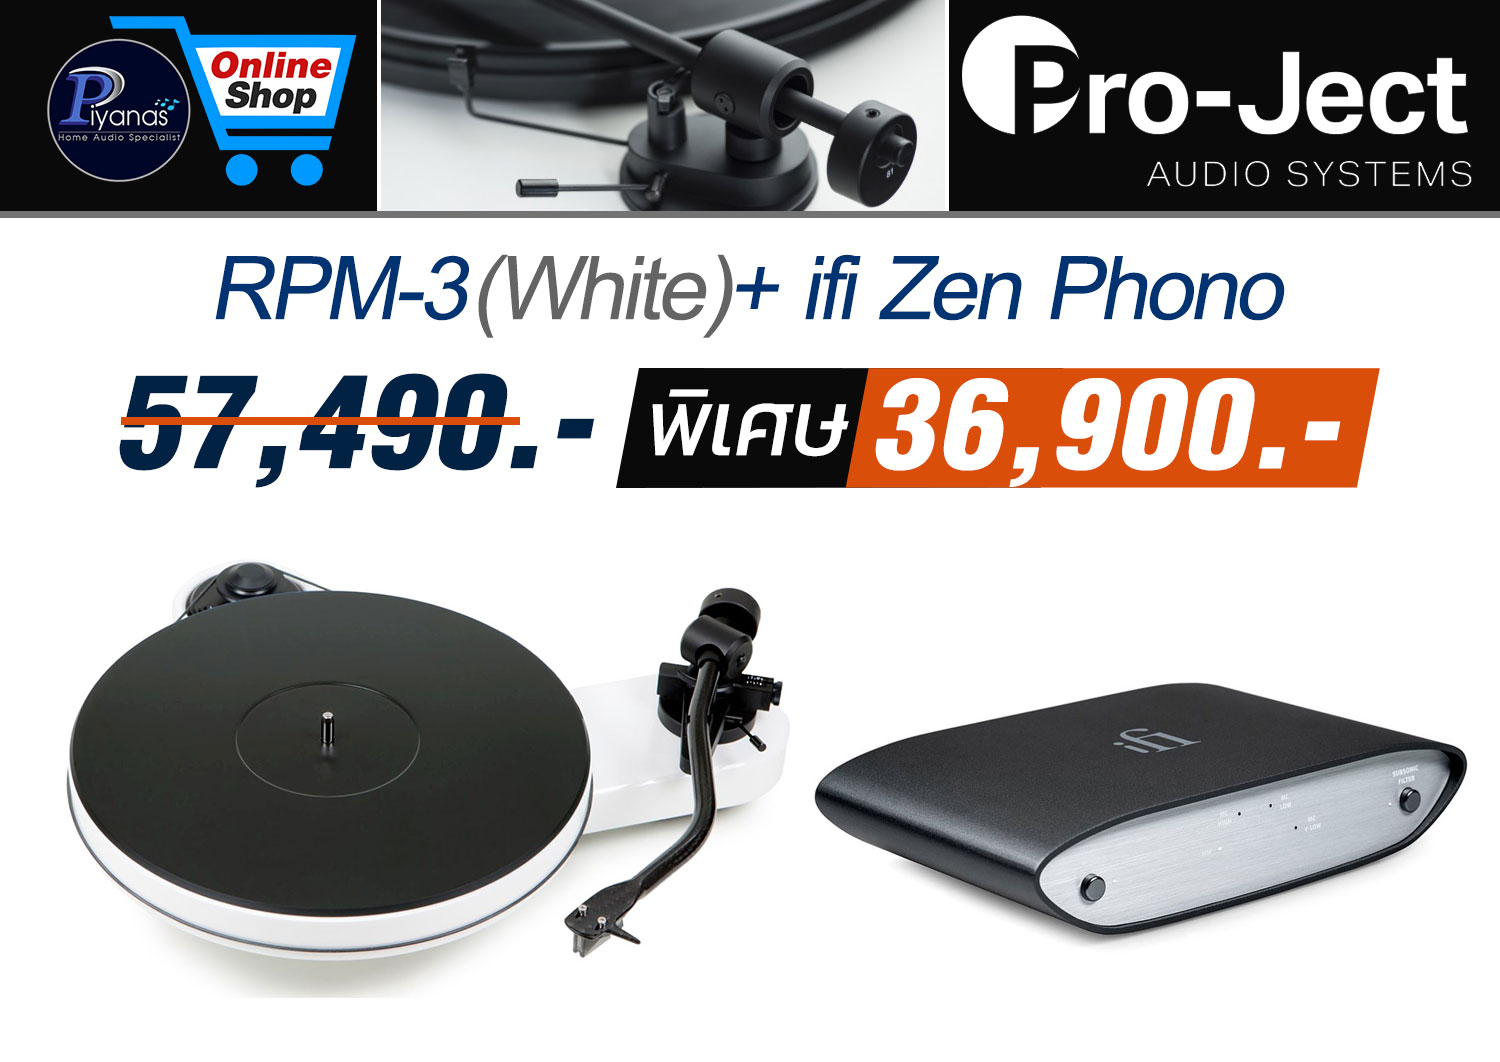 RPM-3 Carbon (White)
+ ifi Zen Phono